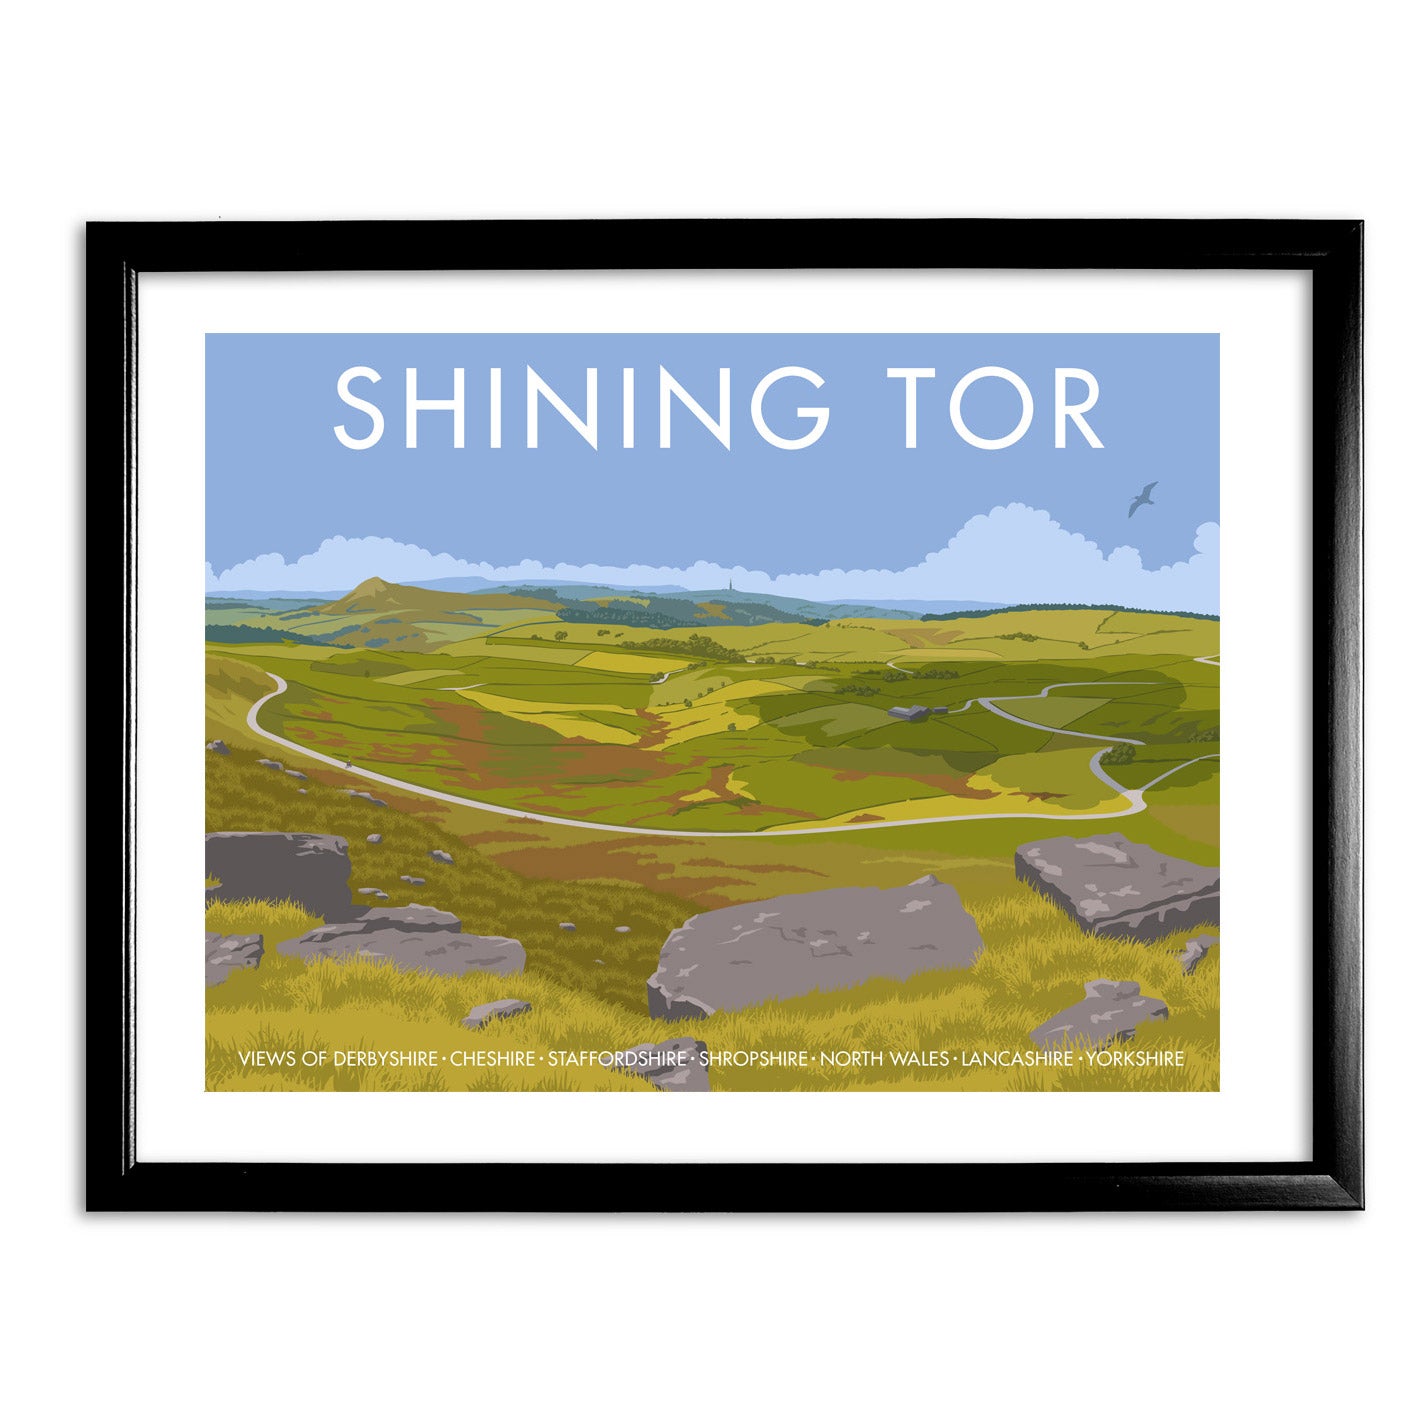 Shining Tor Art Print